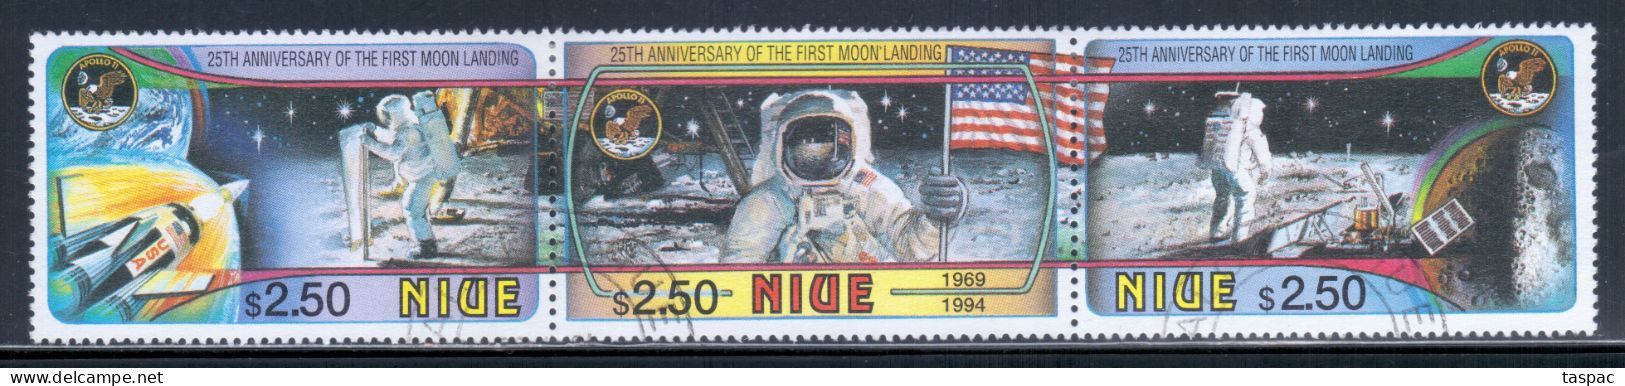 Niue 1994 Mi# 842-844 Used - Strip Of 3 - First Manned Moon Landing, 25th Anniv. / Space - Oceanië